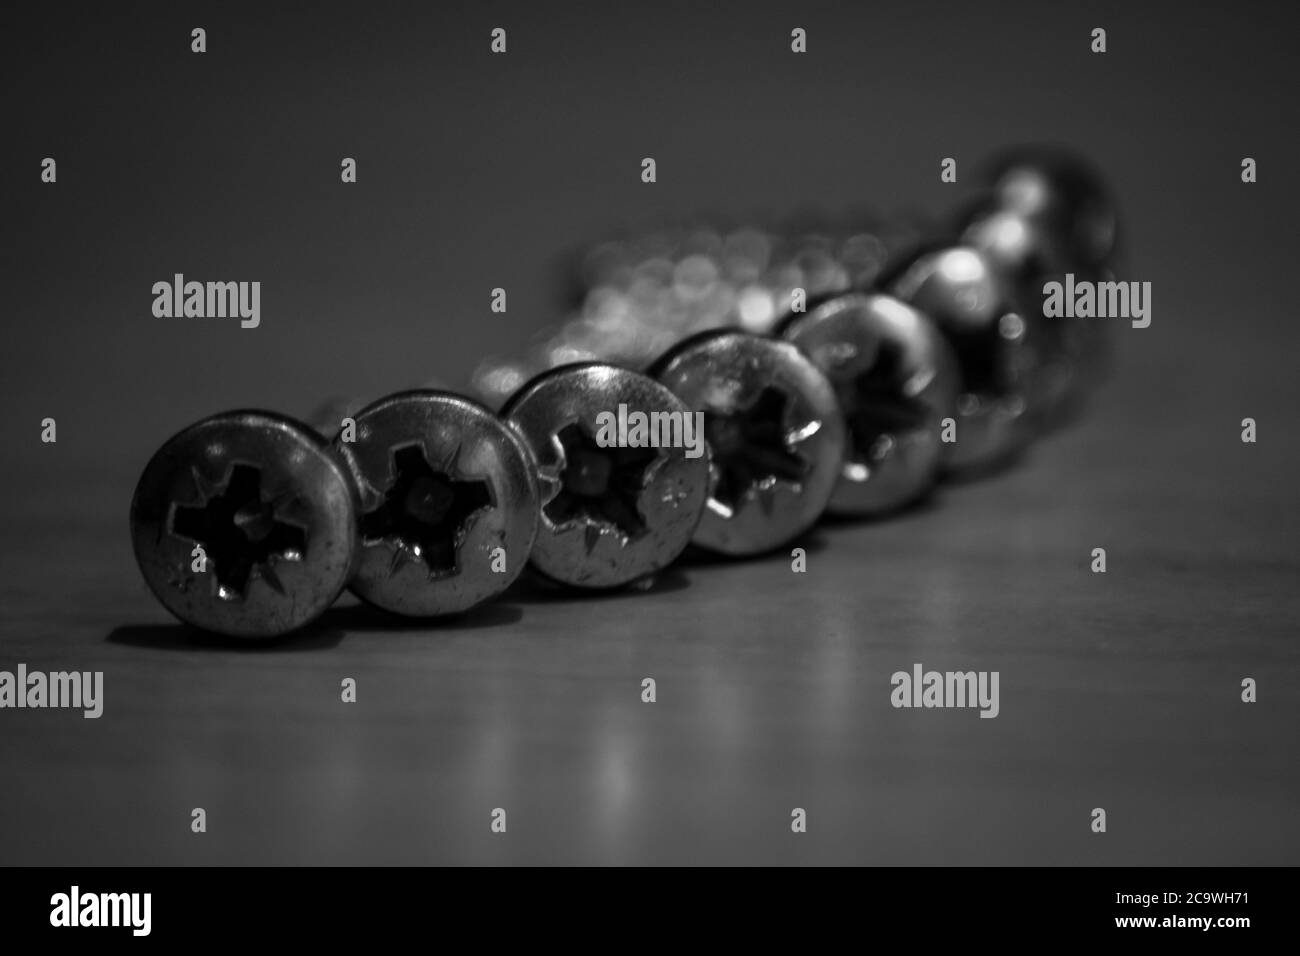 Macro of arranged screws in black and white Stock Photo